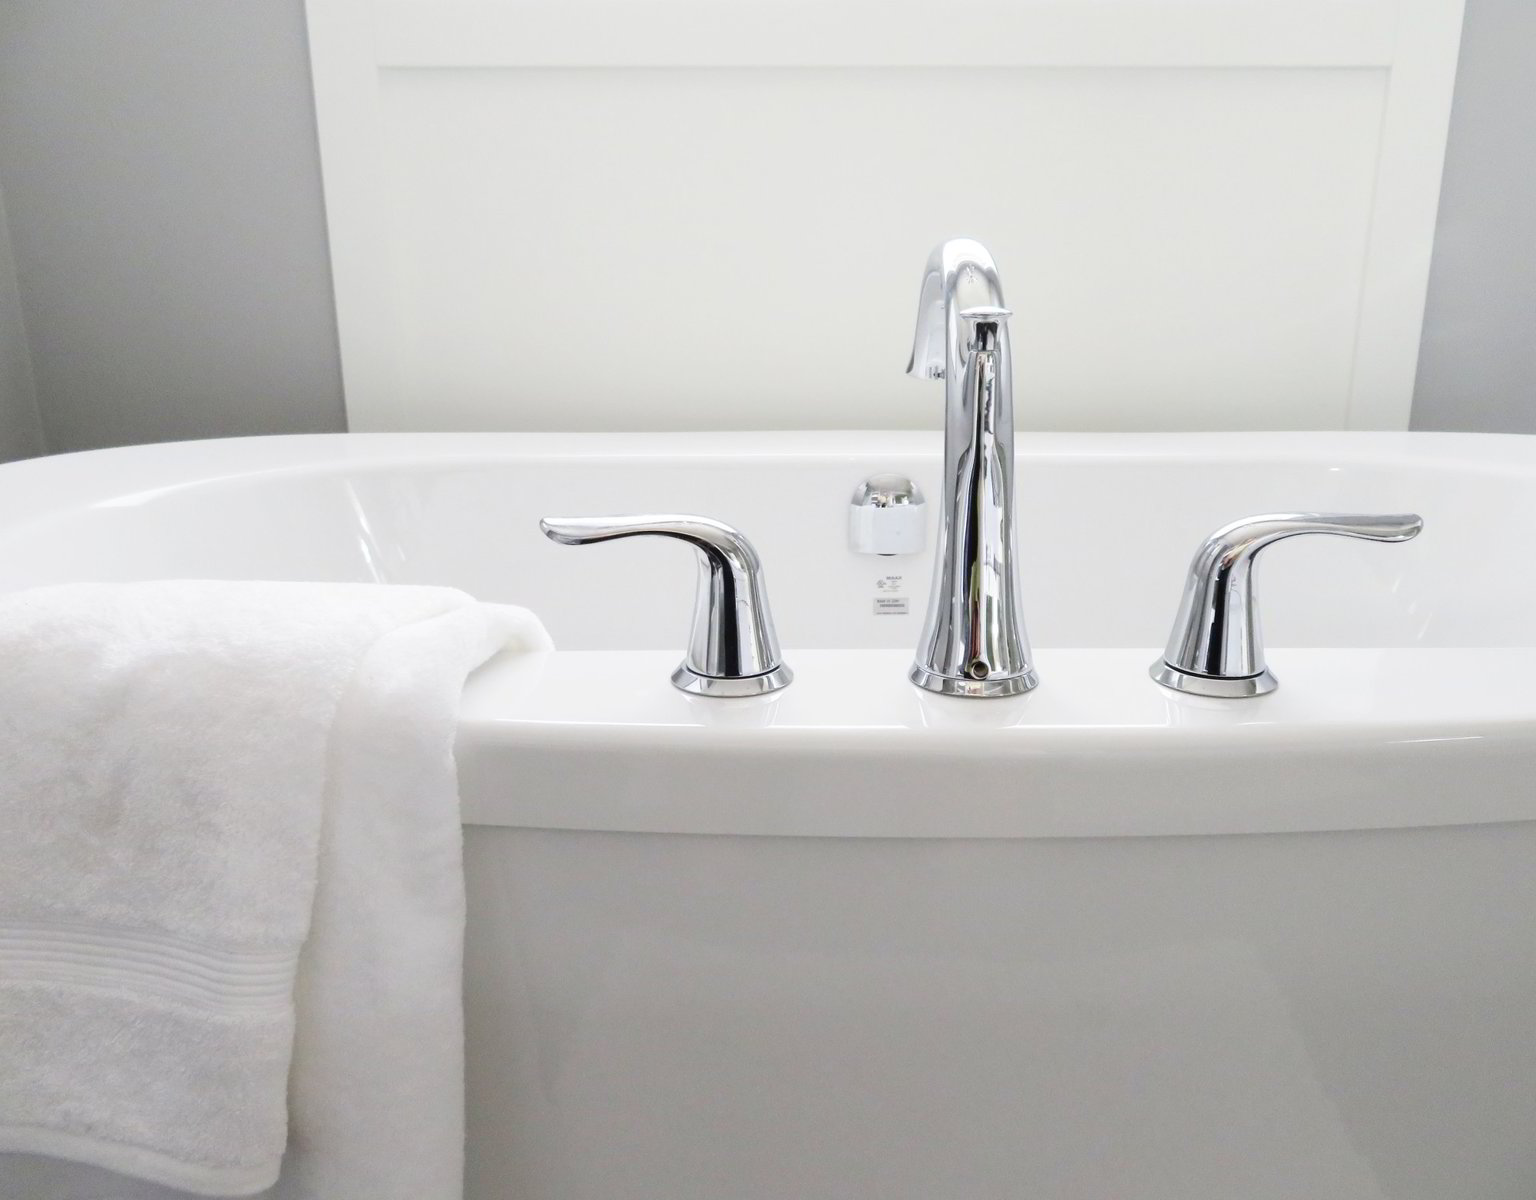 How To Fix A Leaky Bathtub Faucet, How To Caulk Around Bathtub Faucet